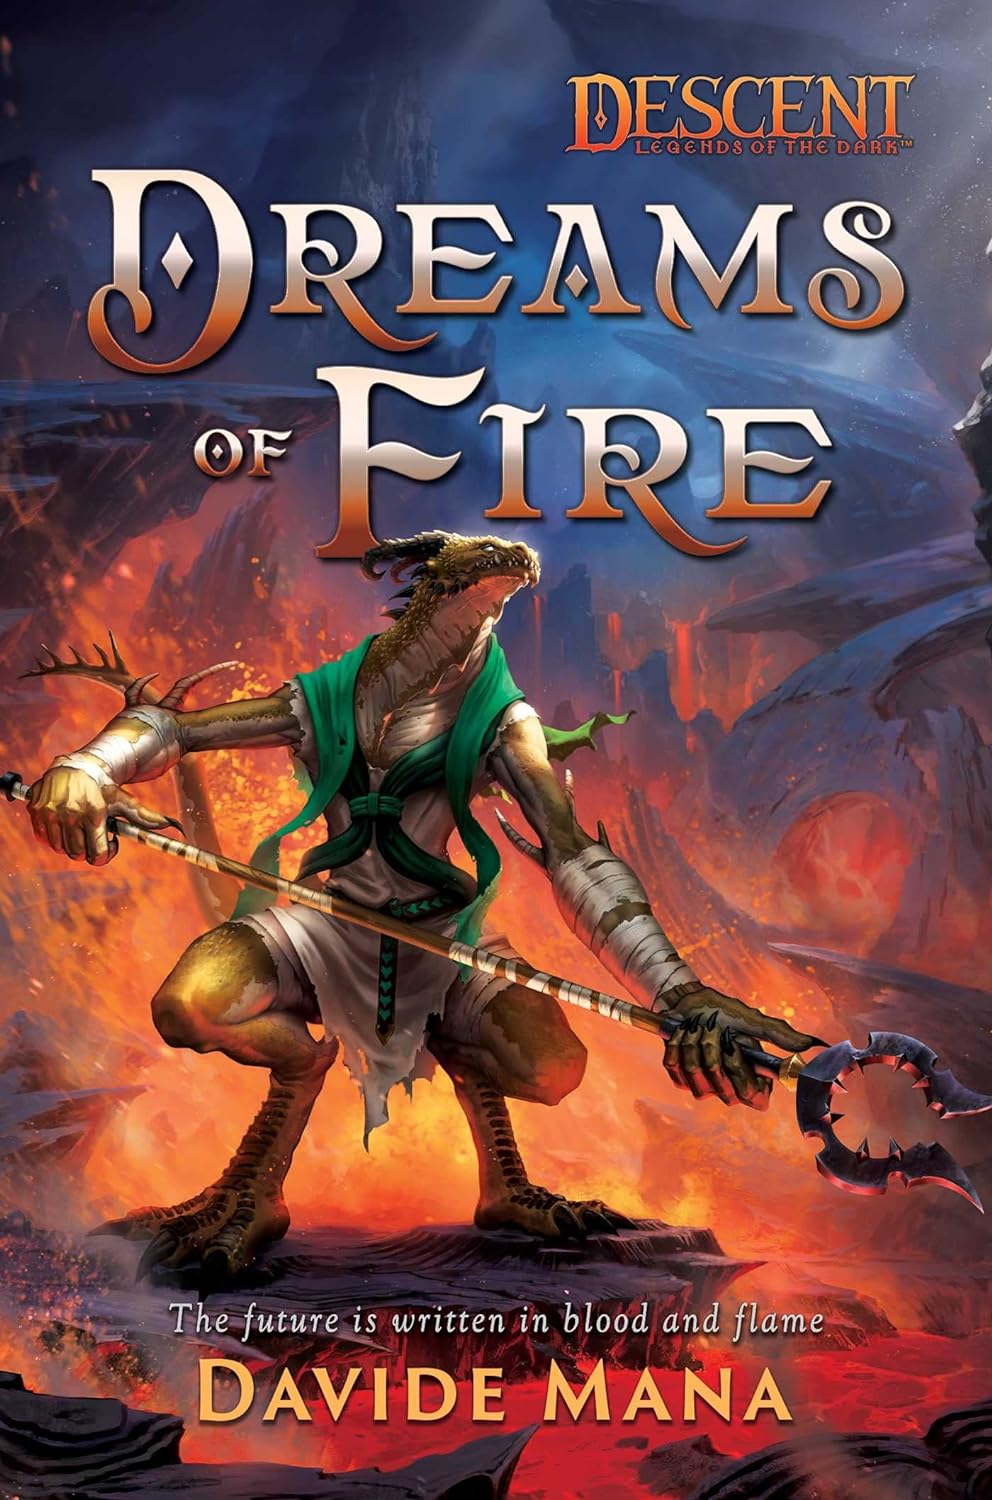 Dreams of Fire: A Descent: Legends of the Dark Novel [Paperback]